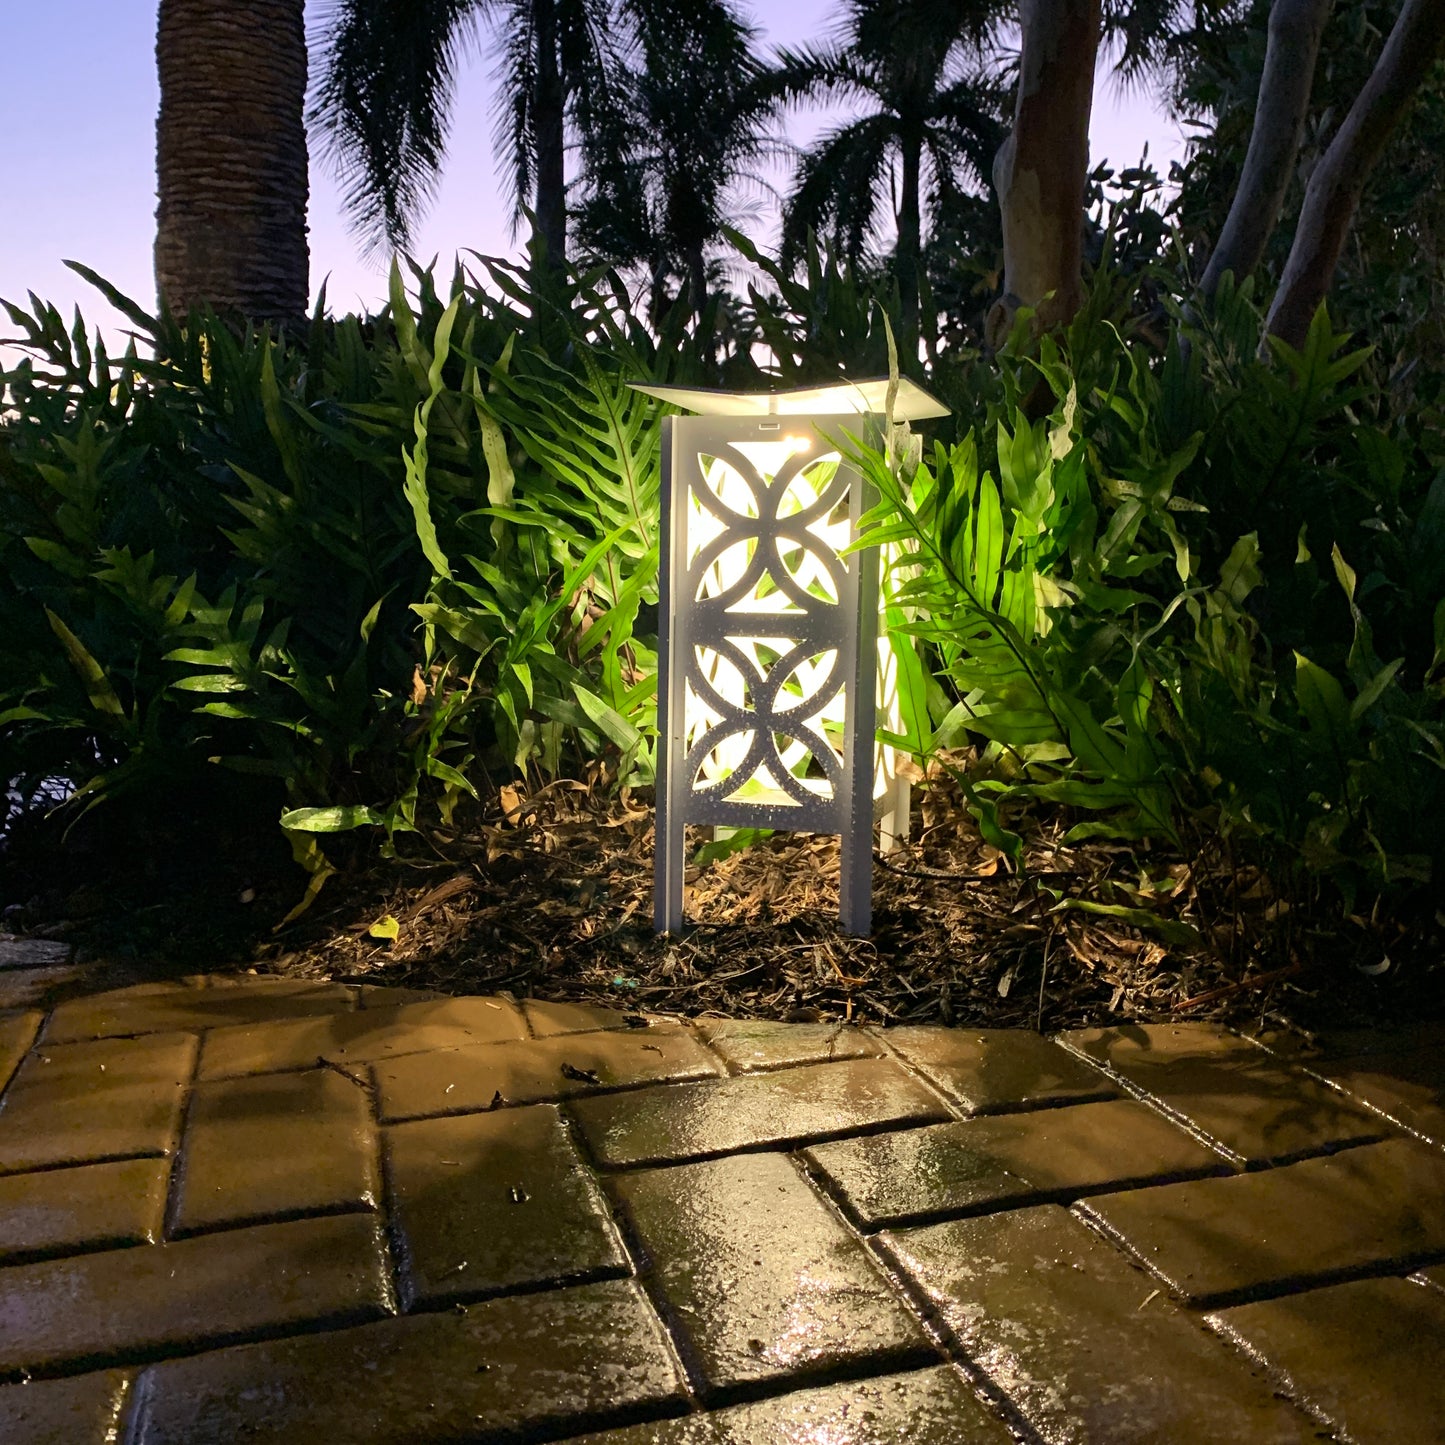 RadiantLight Mid-Century Landscape Light - Garden Light white at night